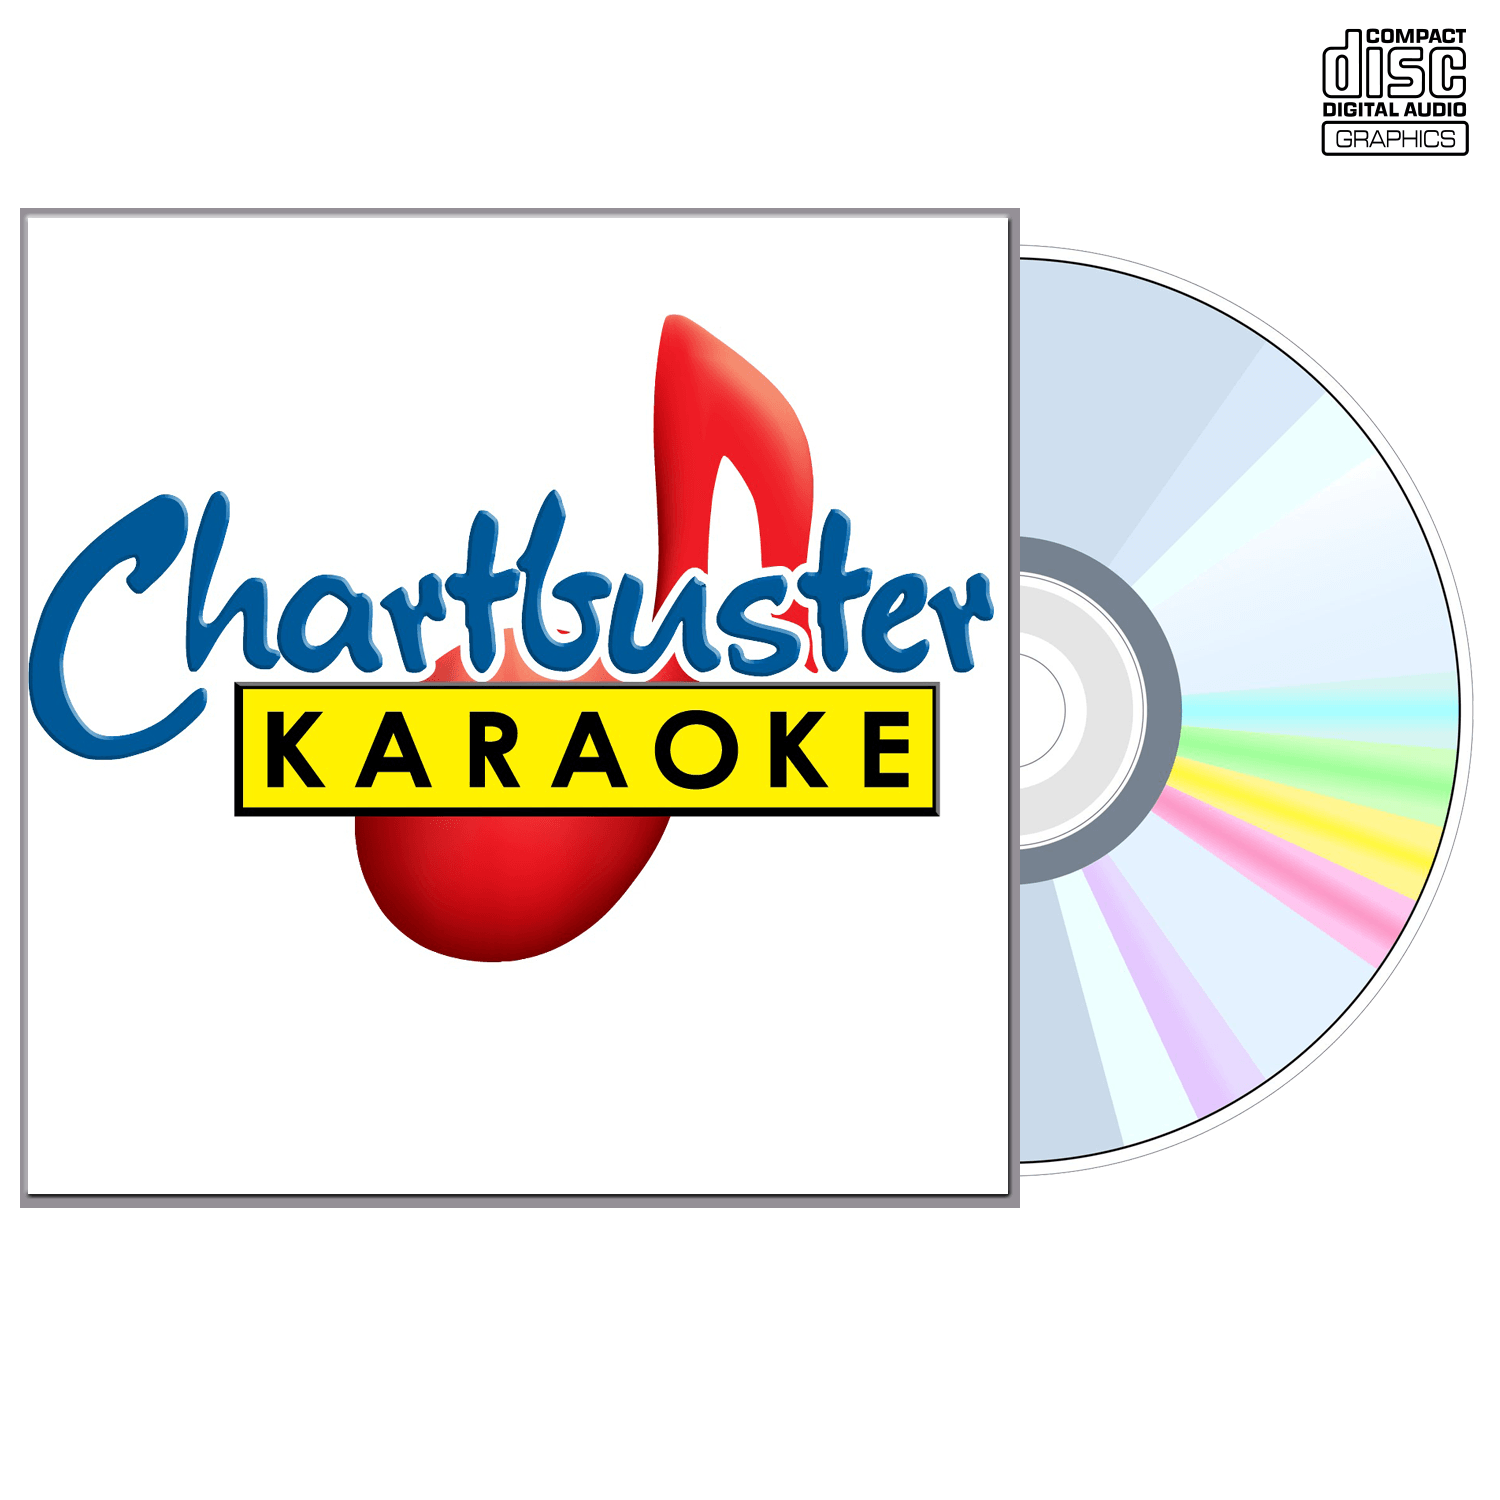 Taylor Swift Vol 3 - CD+G - Chartbuster Karaoke - Karaoke Home Entertainment